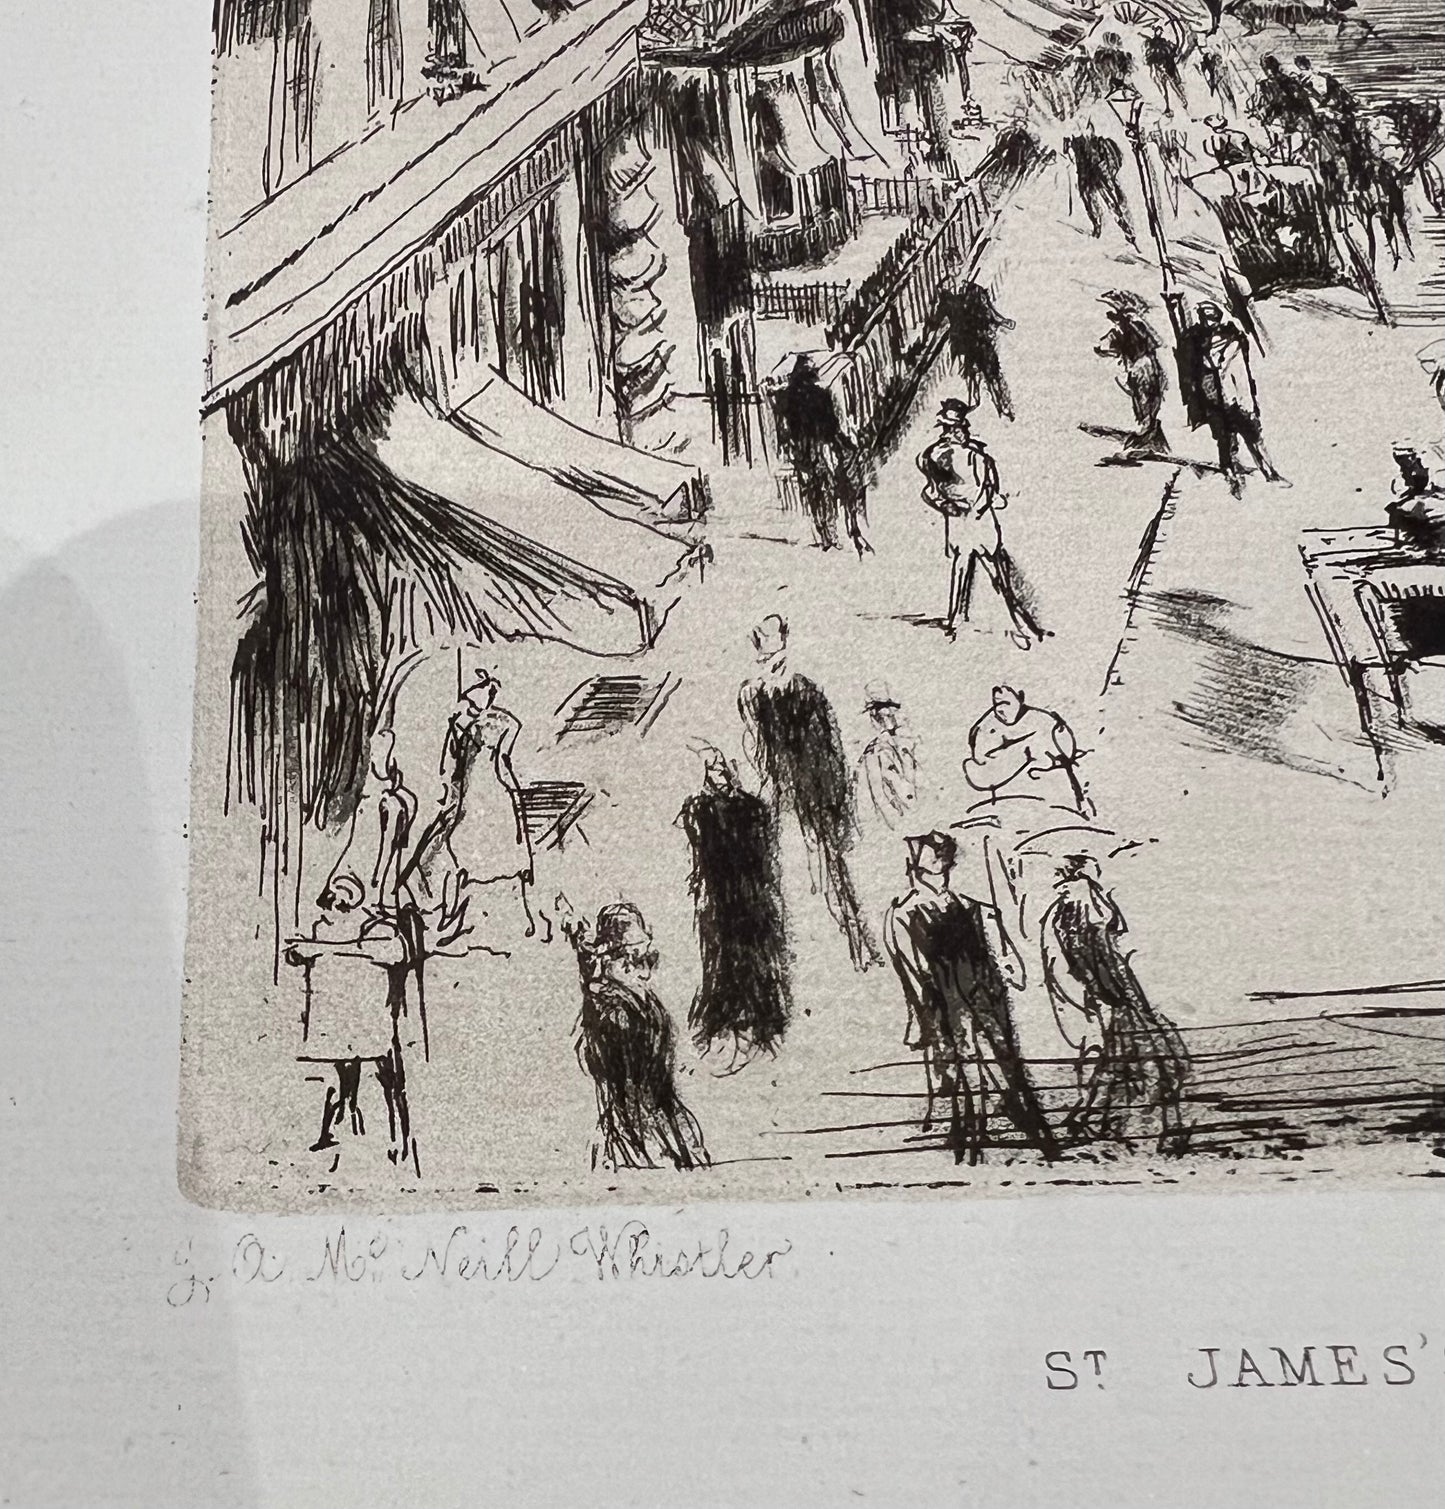 St James Street giugno 1878 di James McNiell WHISTLER 1834 - 1903 